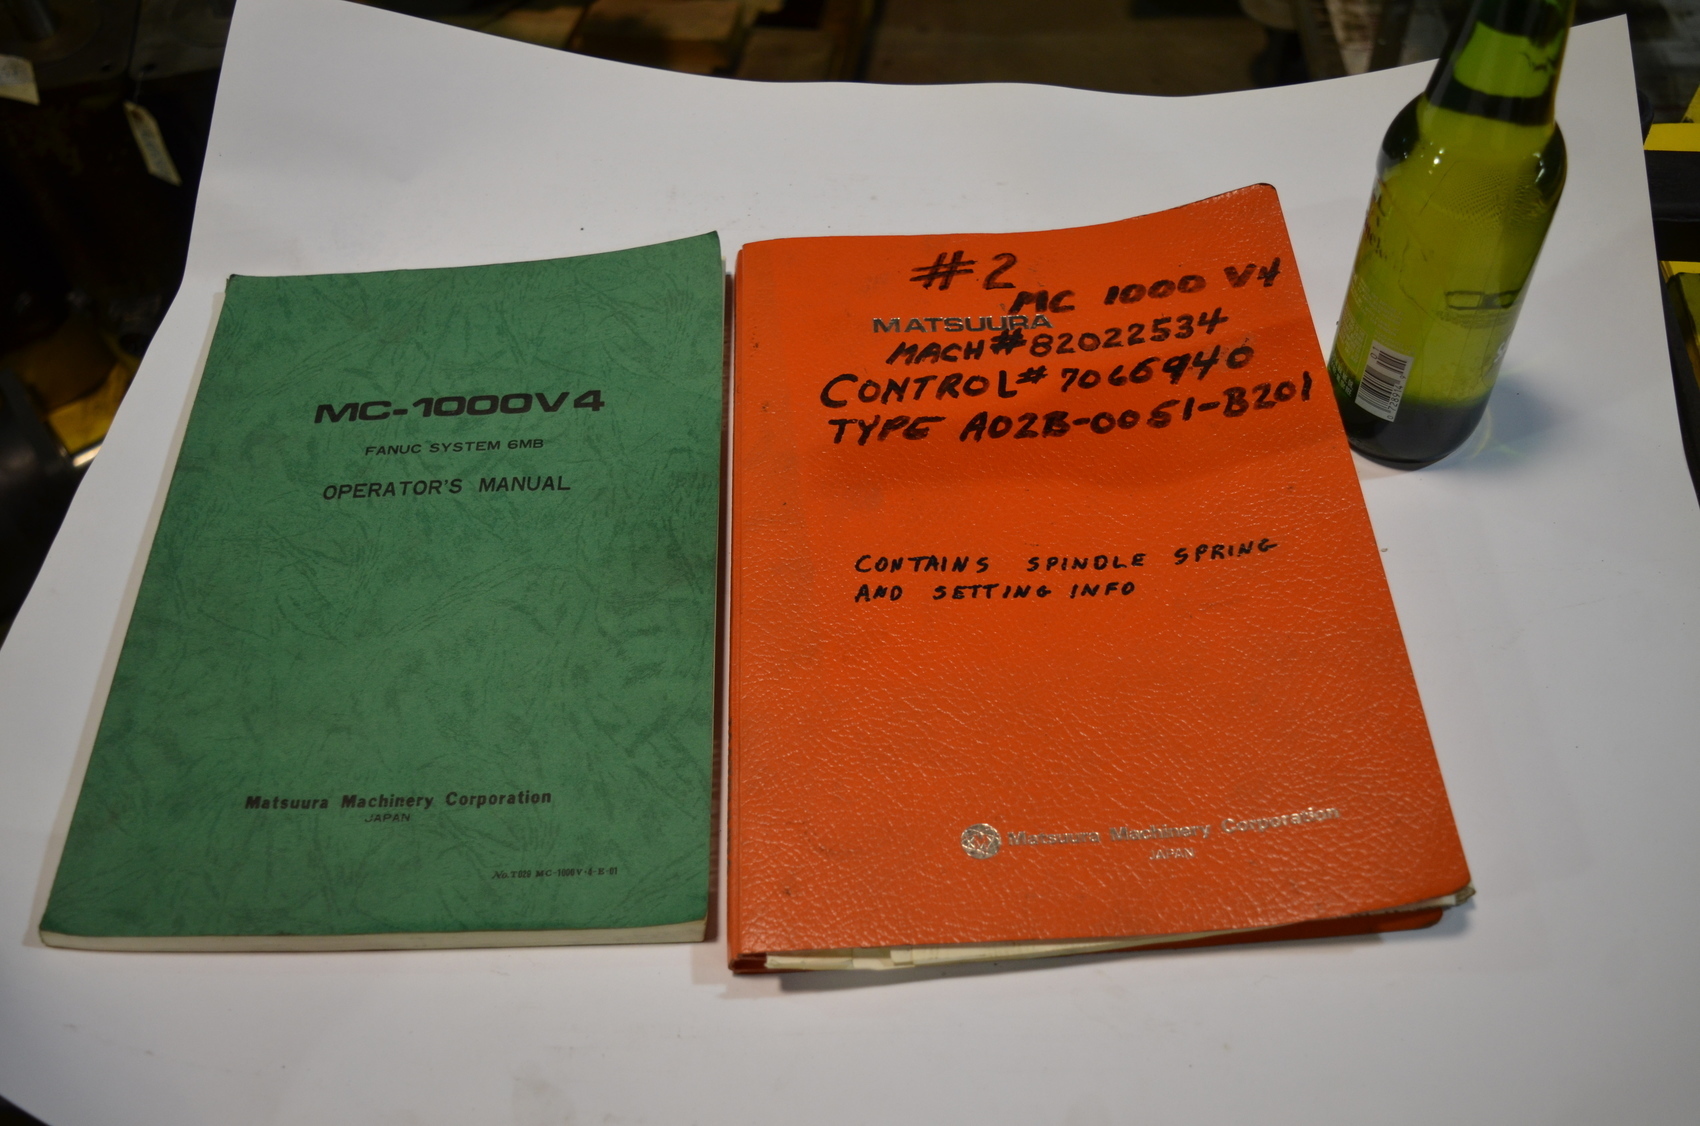 Lot of 2 operator's manuals for Matsuura MC-1000V4 Electric Schematic